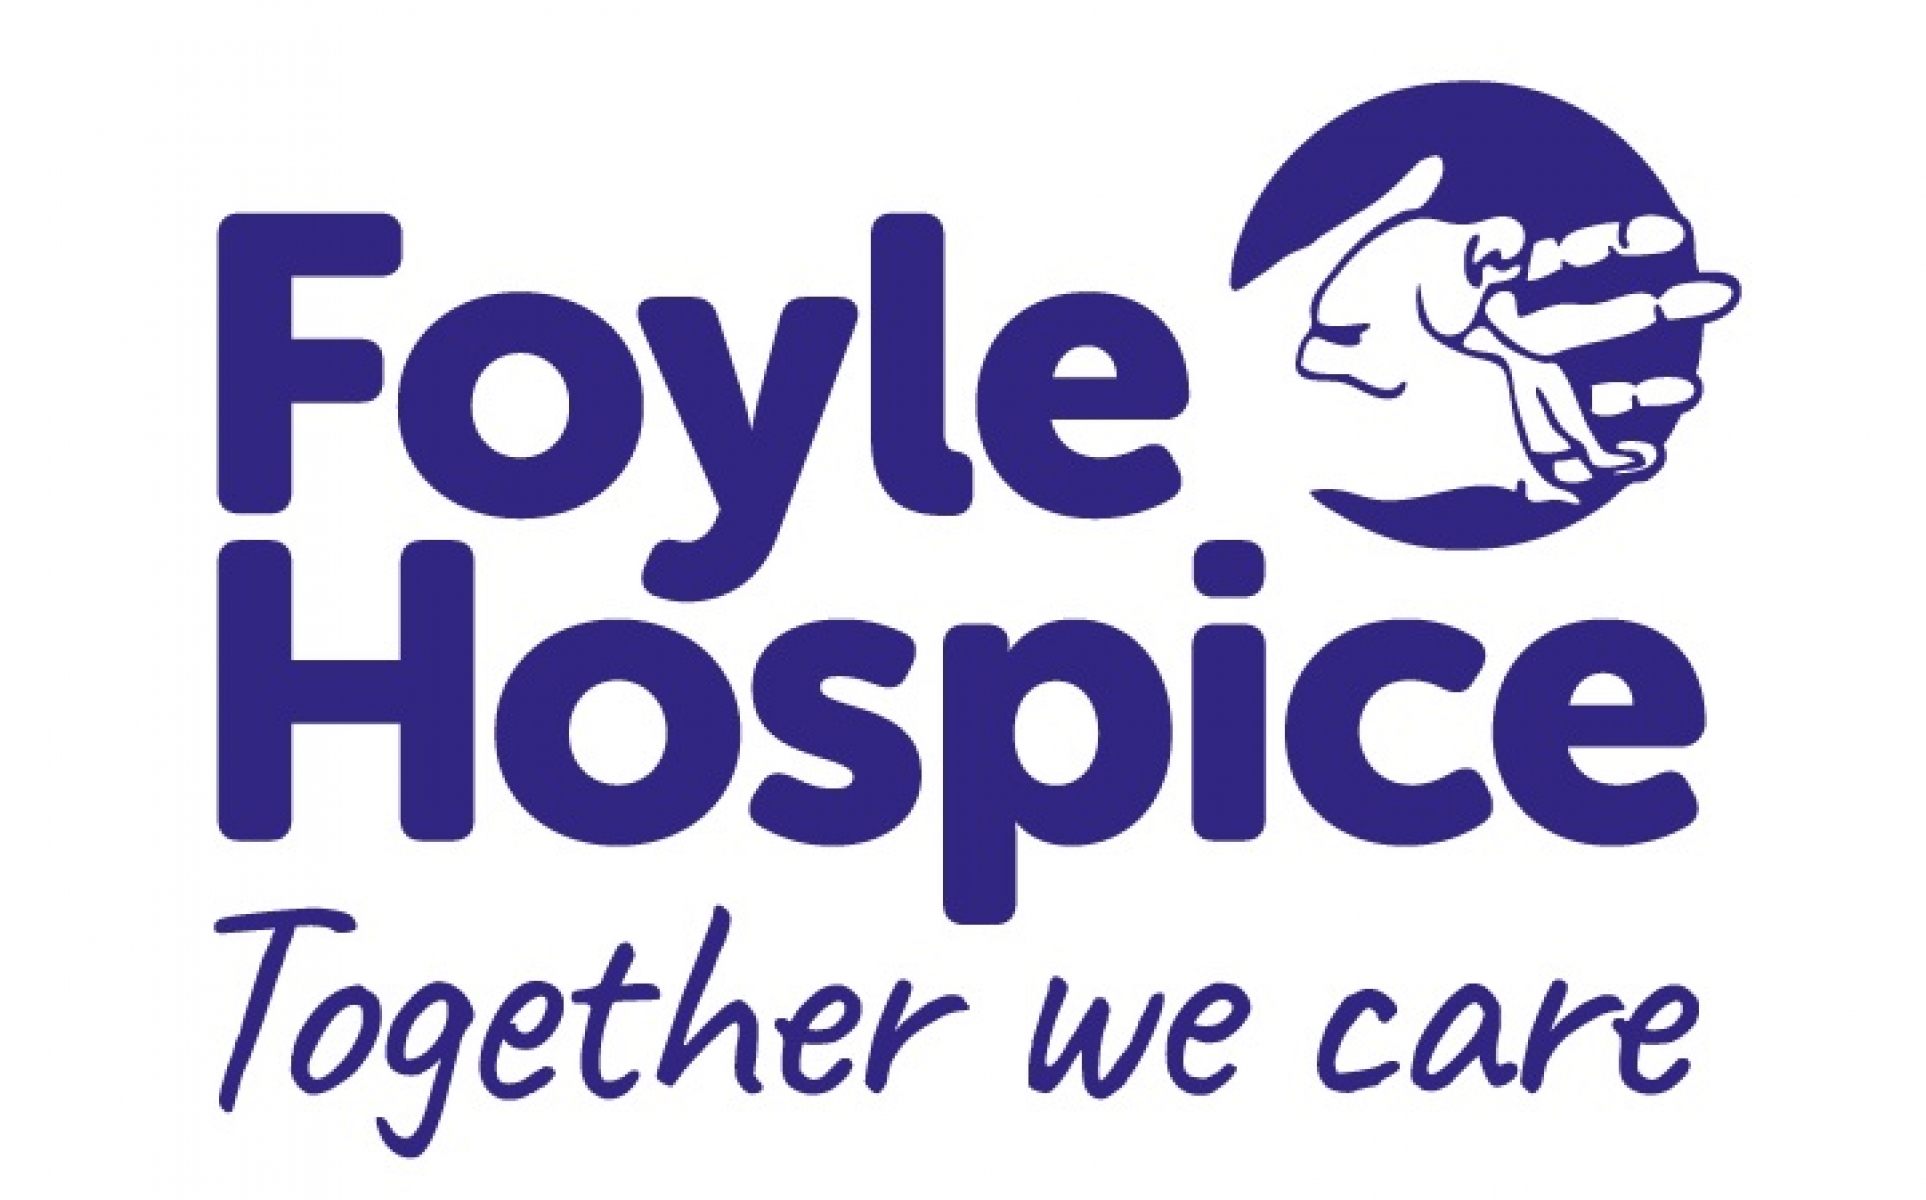 Foyle Hospice eCards